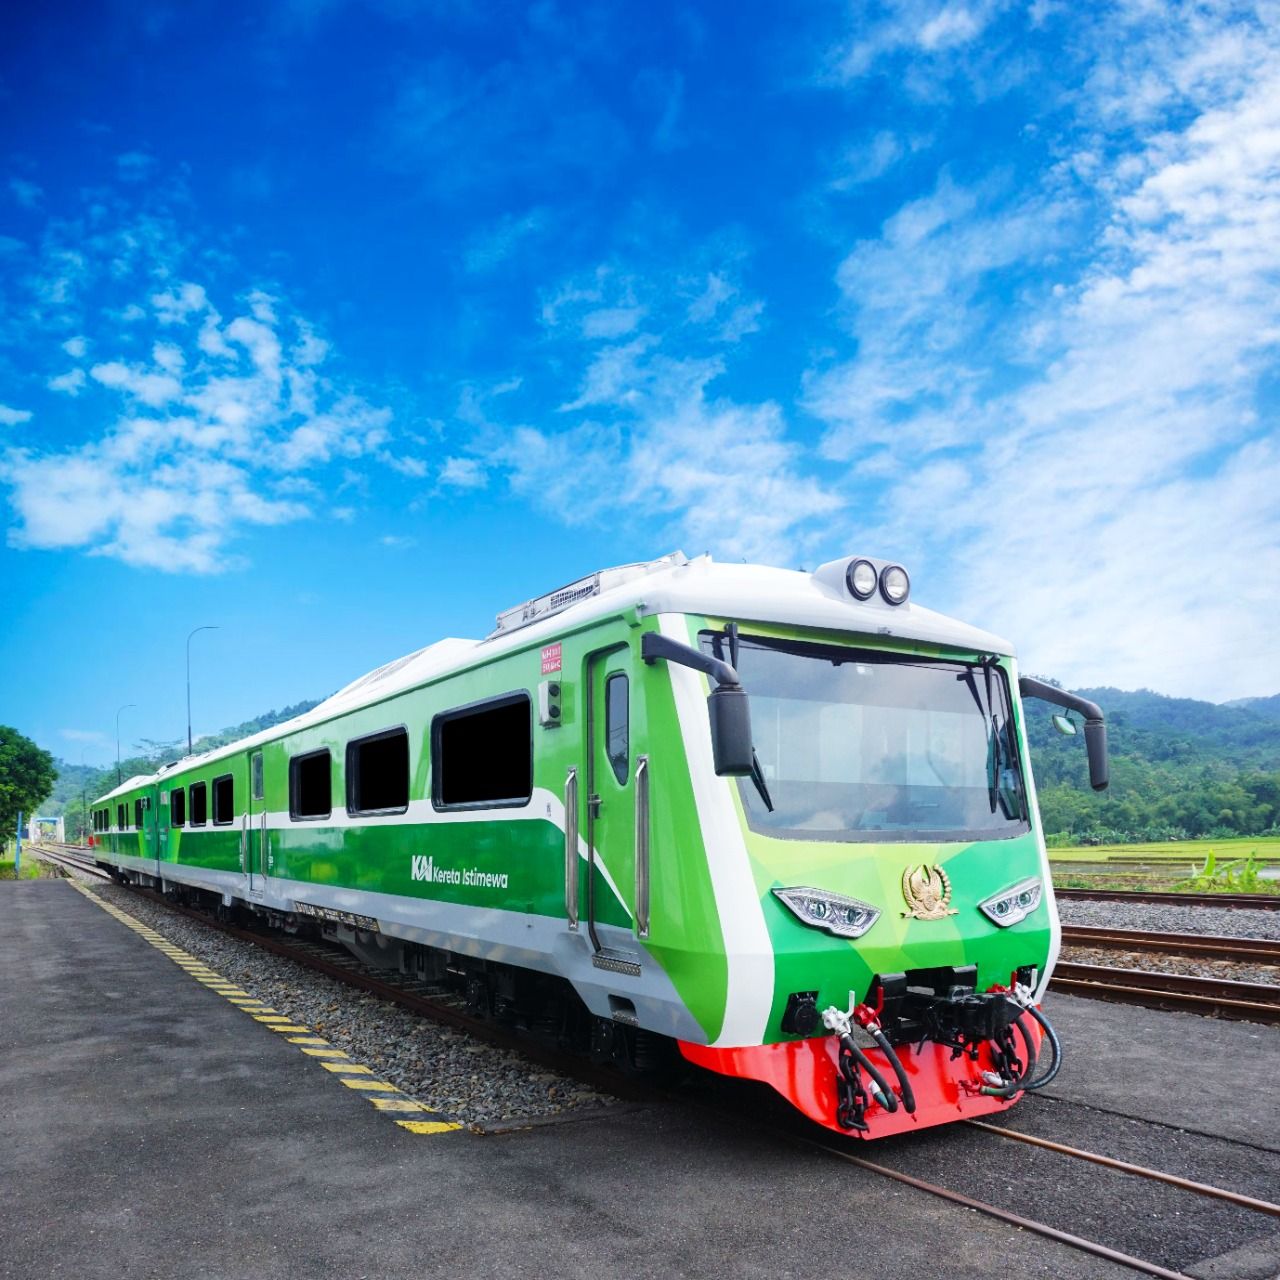 Tiket Kereta Api Mudik Lebaran Tersedia Mulai Bulan Maret: PT KAI Daop 3 Cirebon